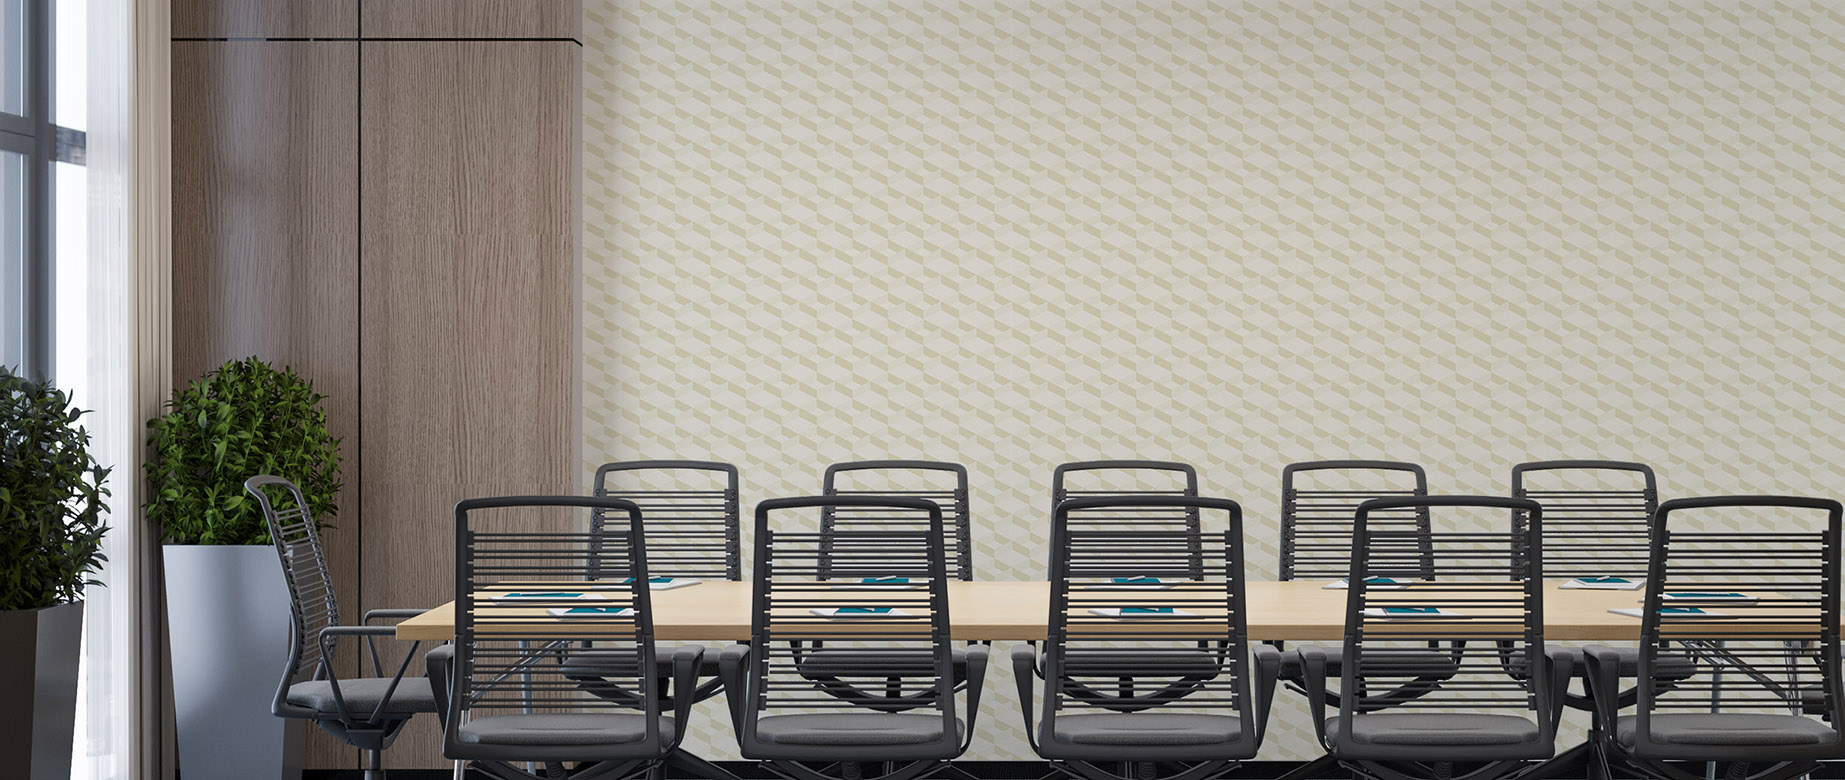 beige-geometric-design-Seamless design repeat pattern wallpaper-in-wide-room